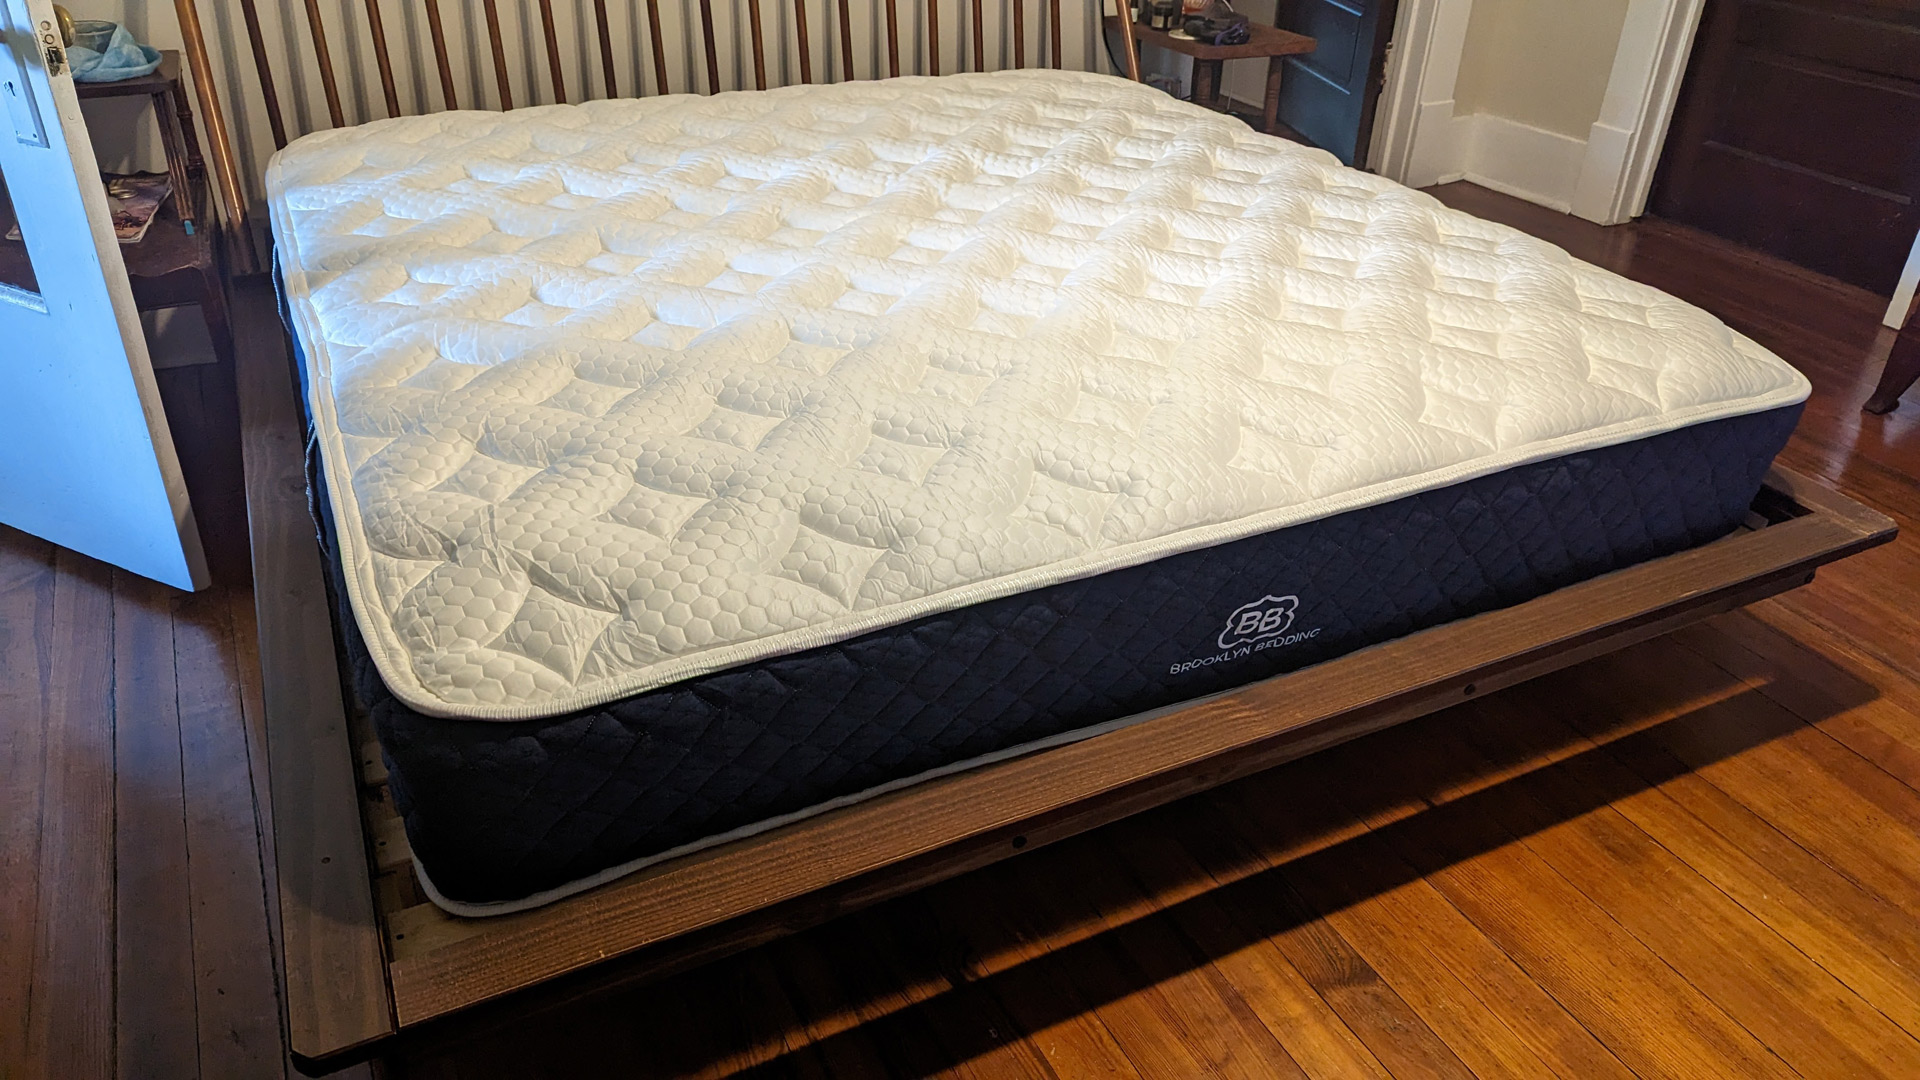 brooklyn bedding ultimate dreams 11 pillow top mattress